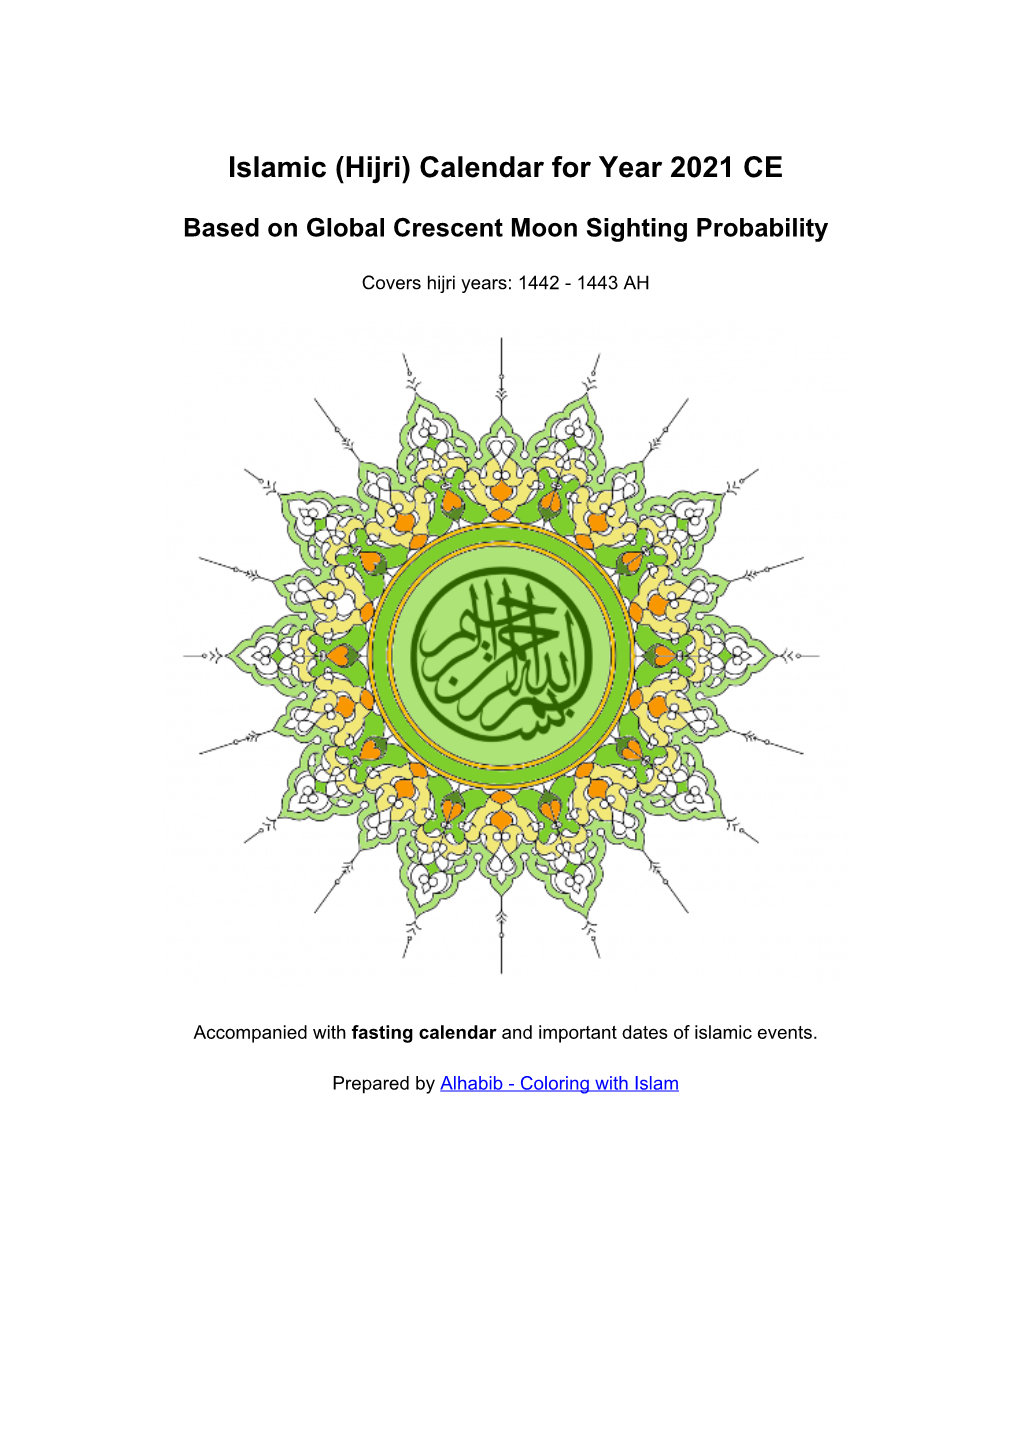 Global Islamic Calendar for Year 2021 CE